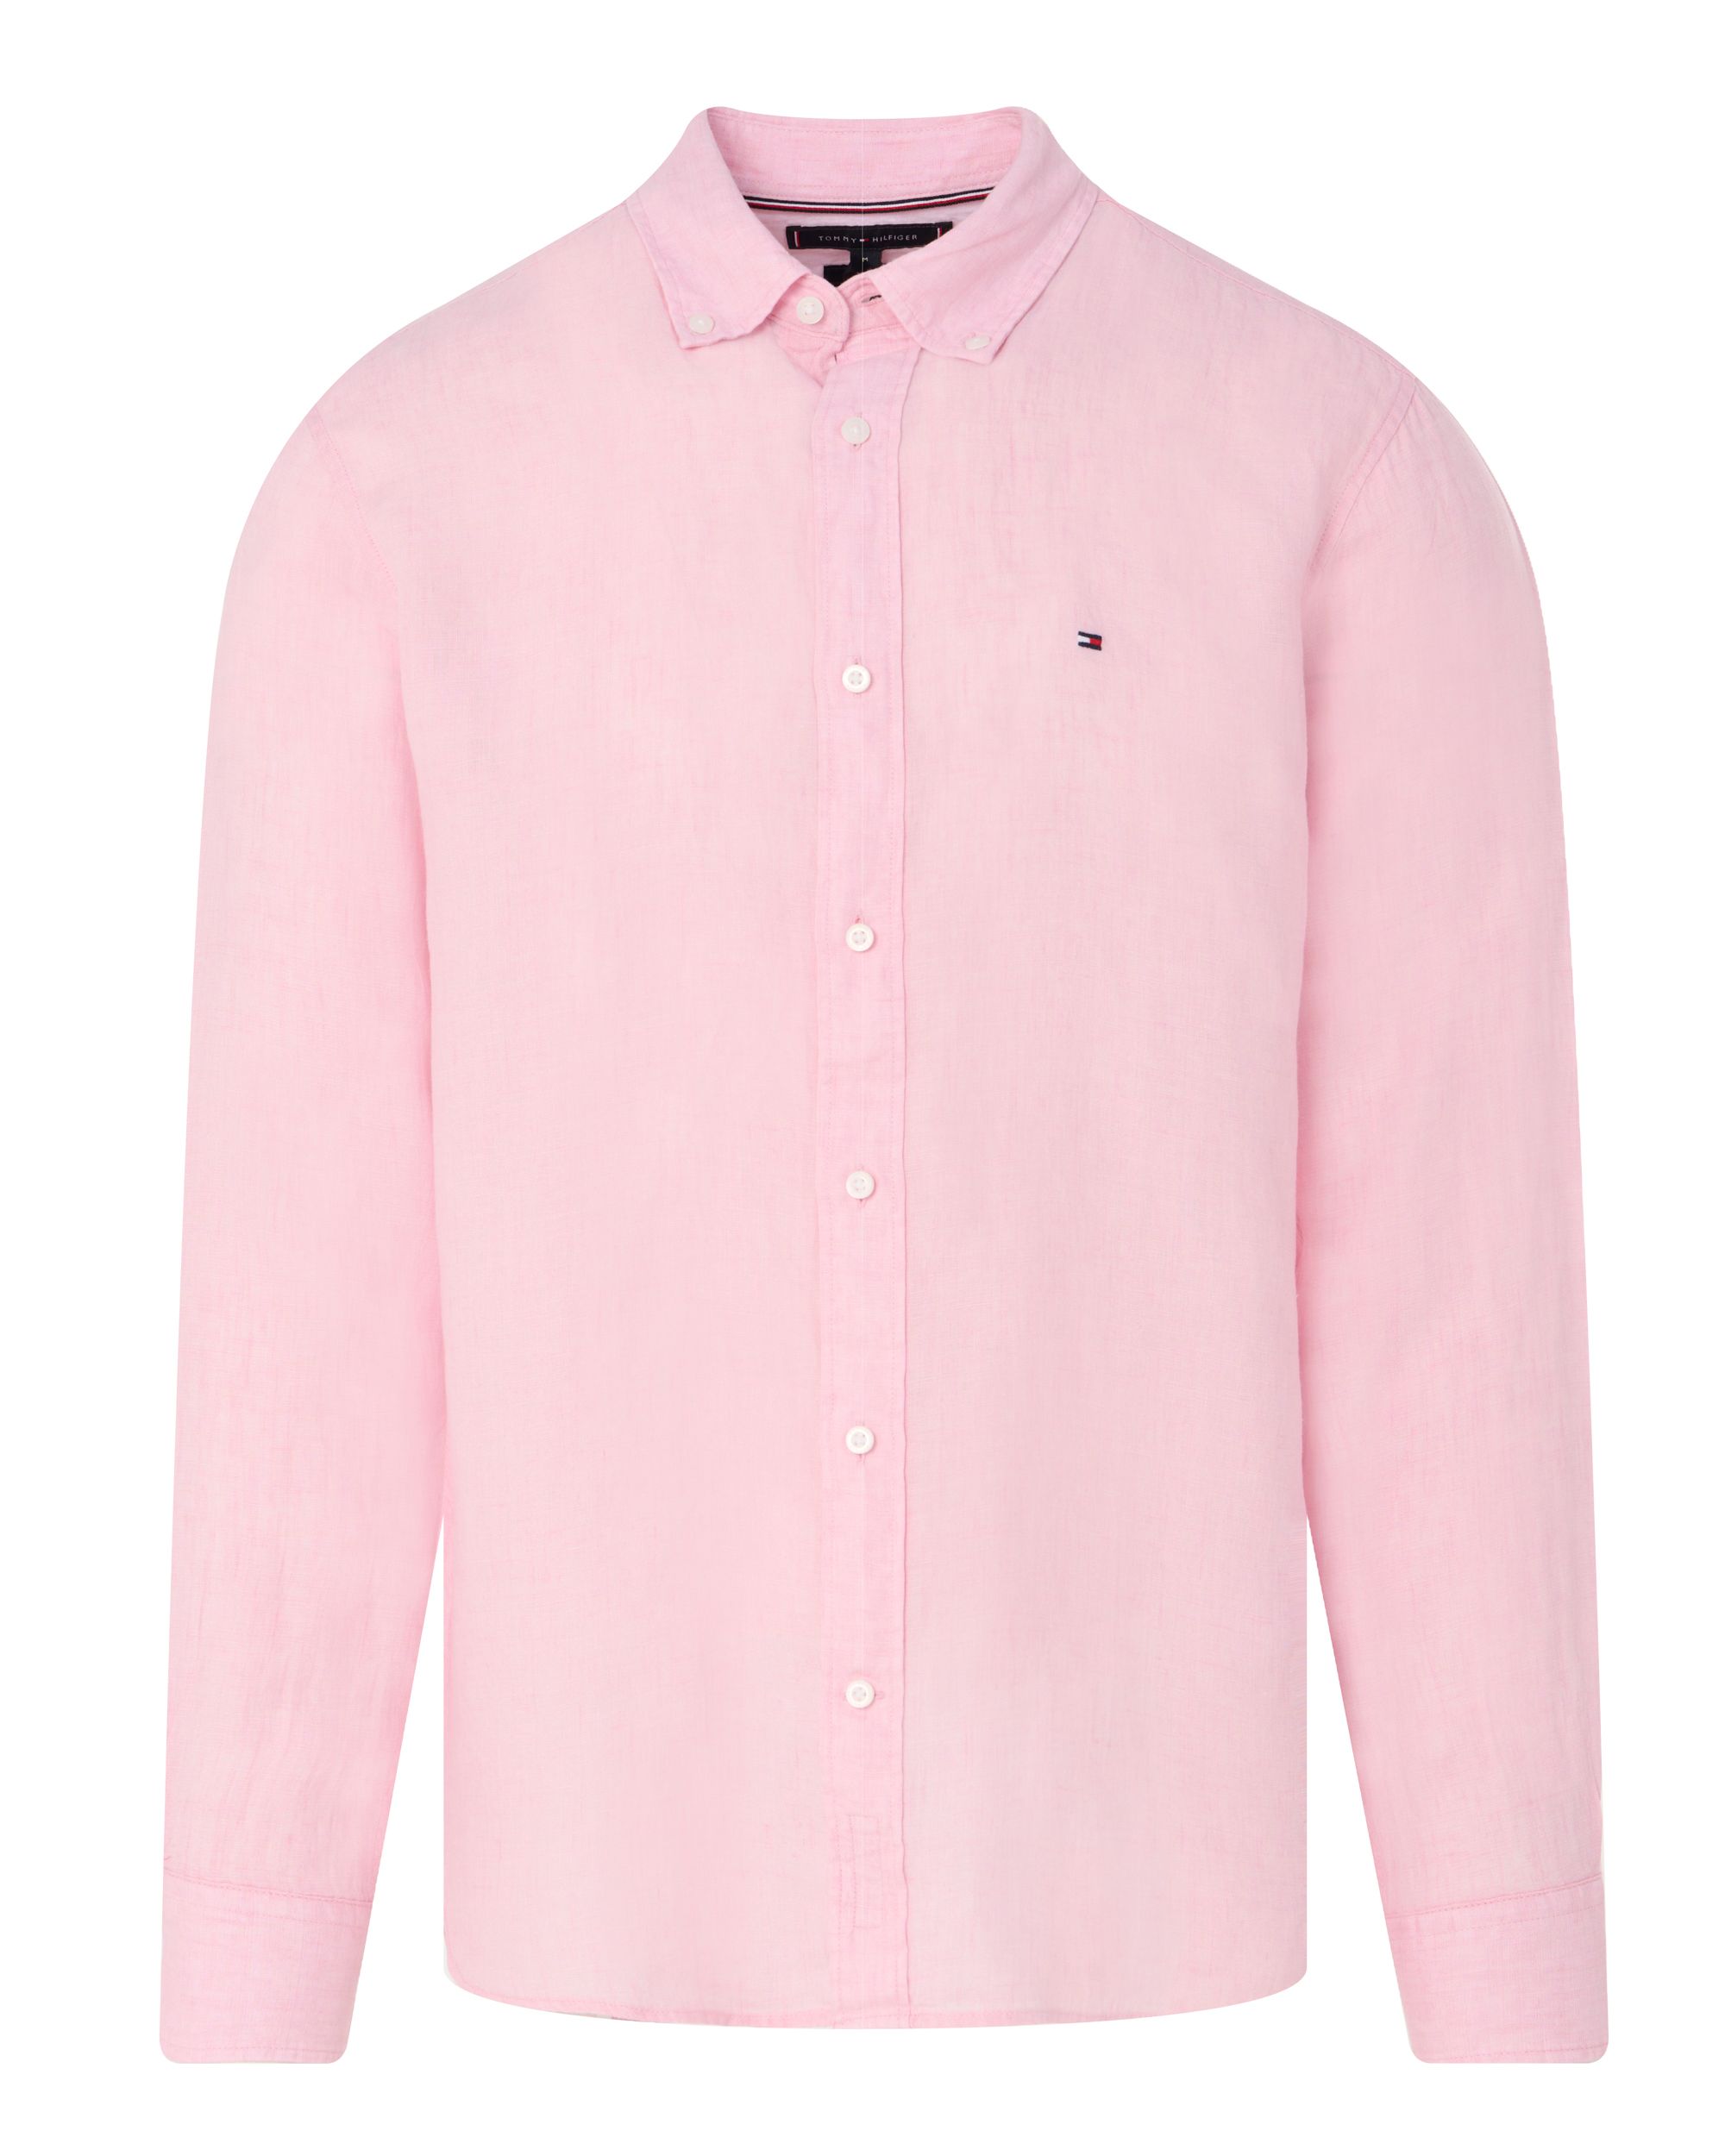 Tommy Hilfiger Menswear Casual Overhemd LM Roze 094641-001-L